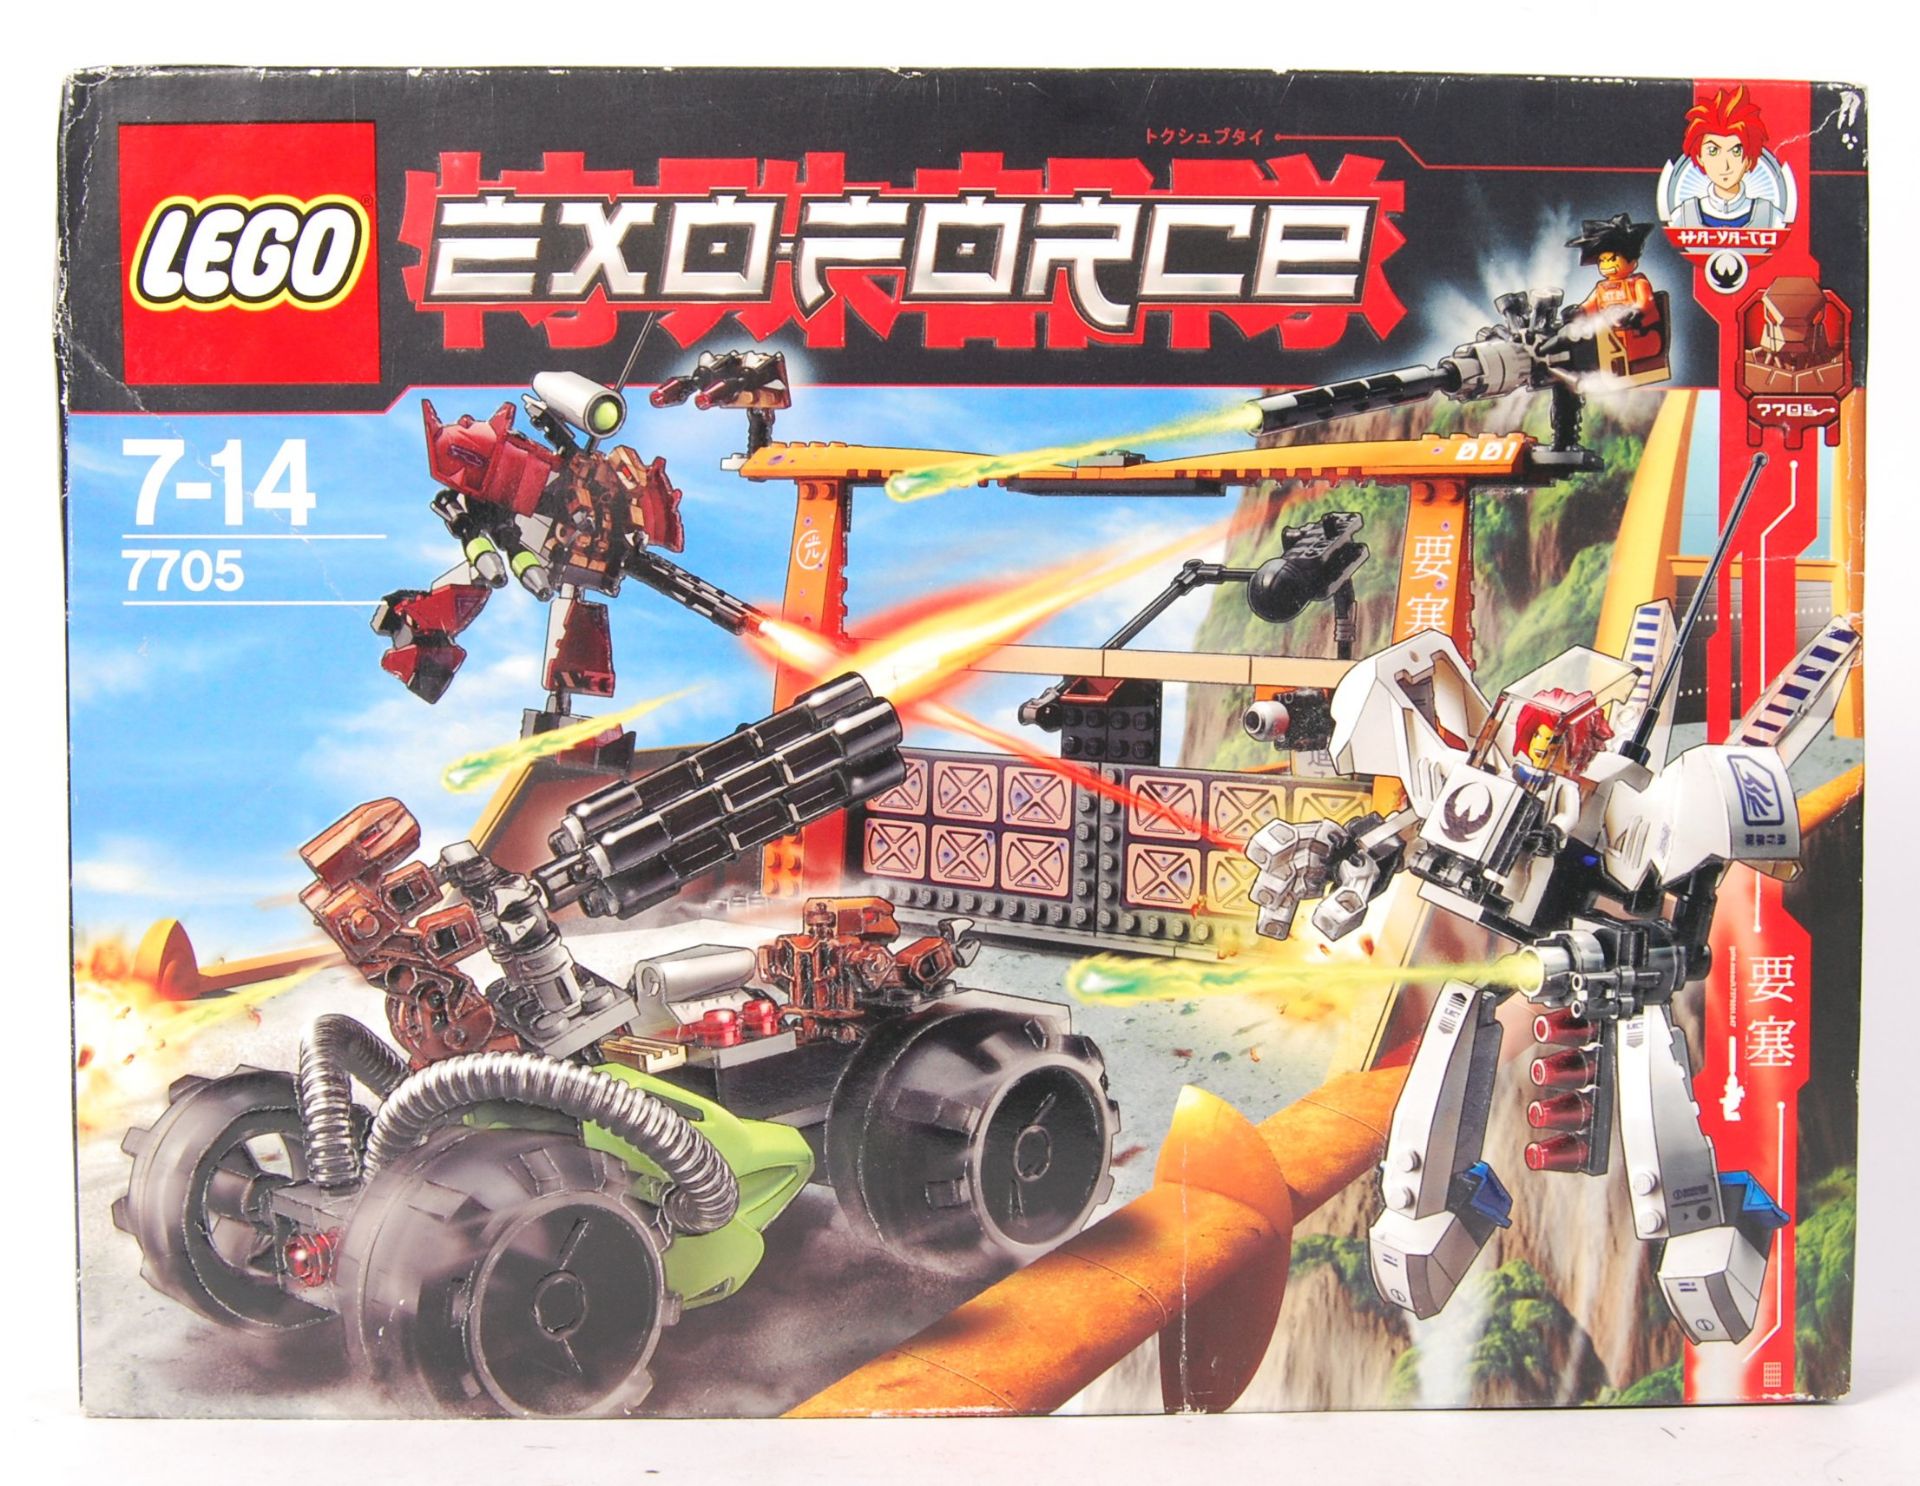 LEGO EXO-FORCE 7705 ' GATE ASSAULT ' SEALED